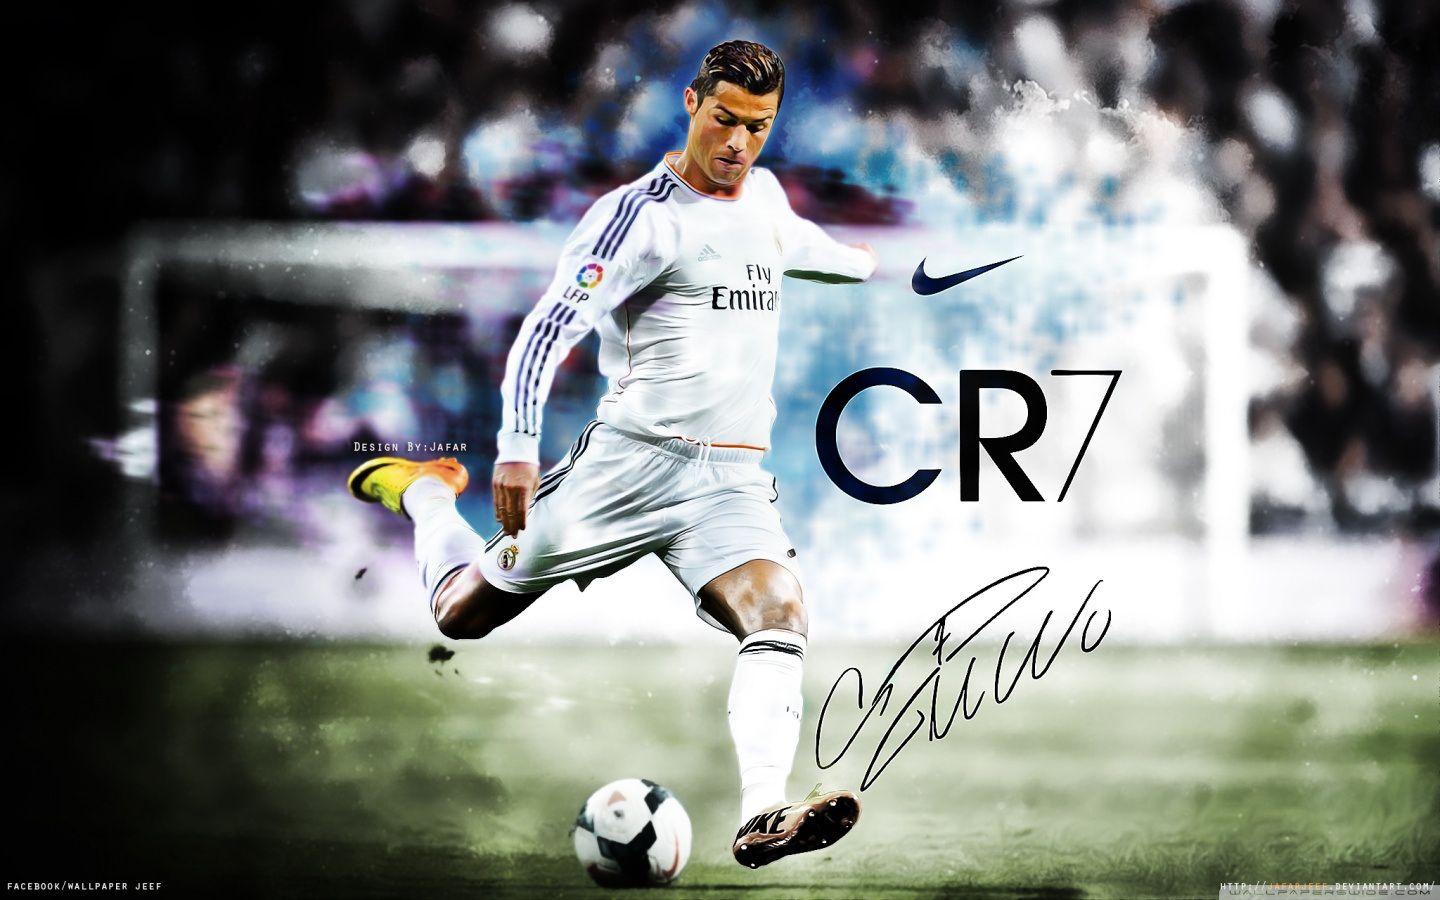 cr7 wallpaper,football player,photograph,player,soccer player,football